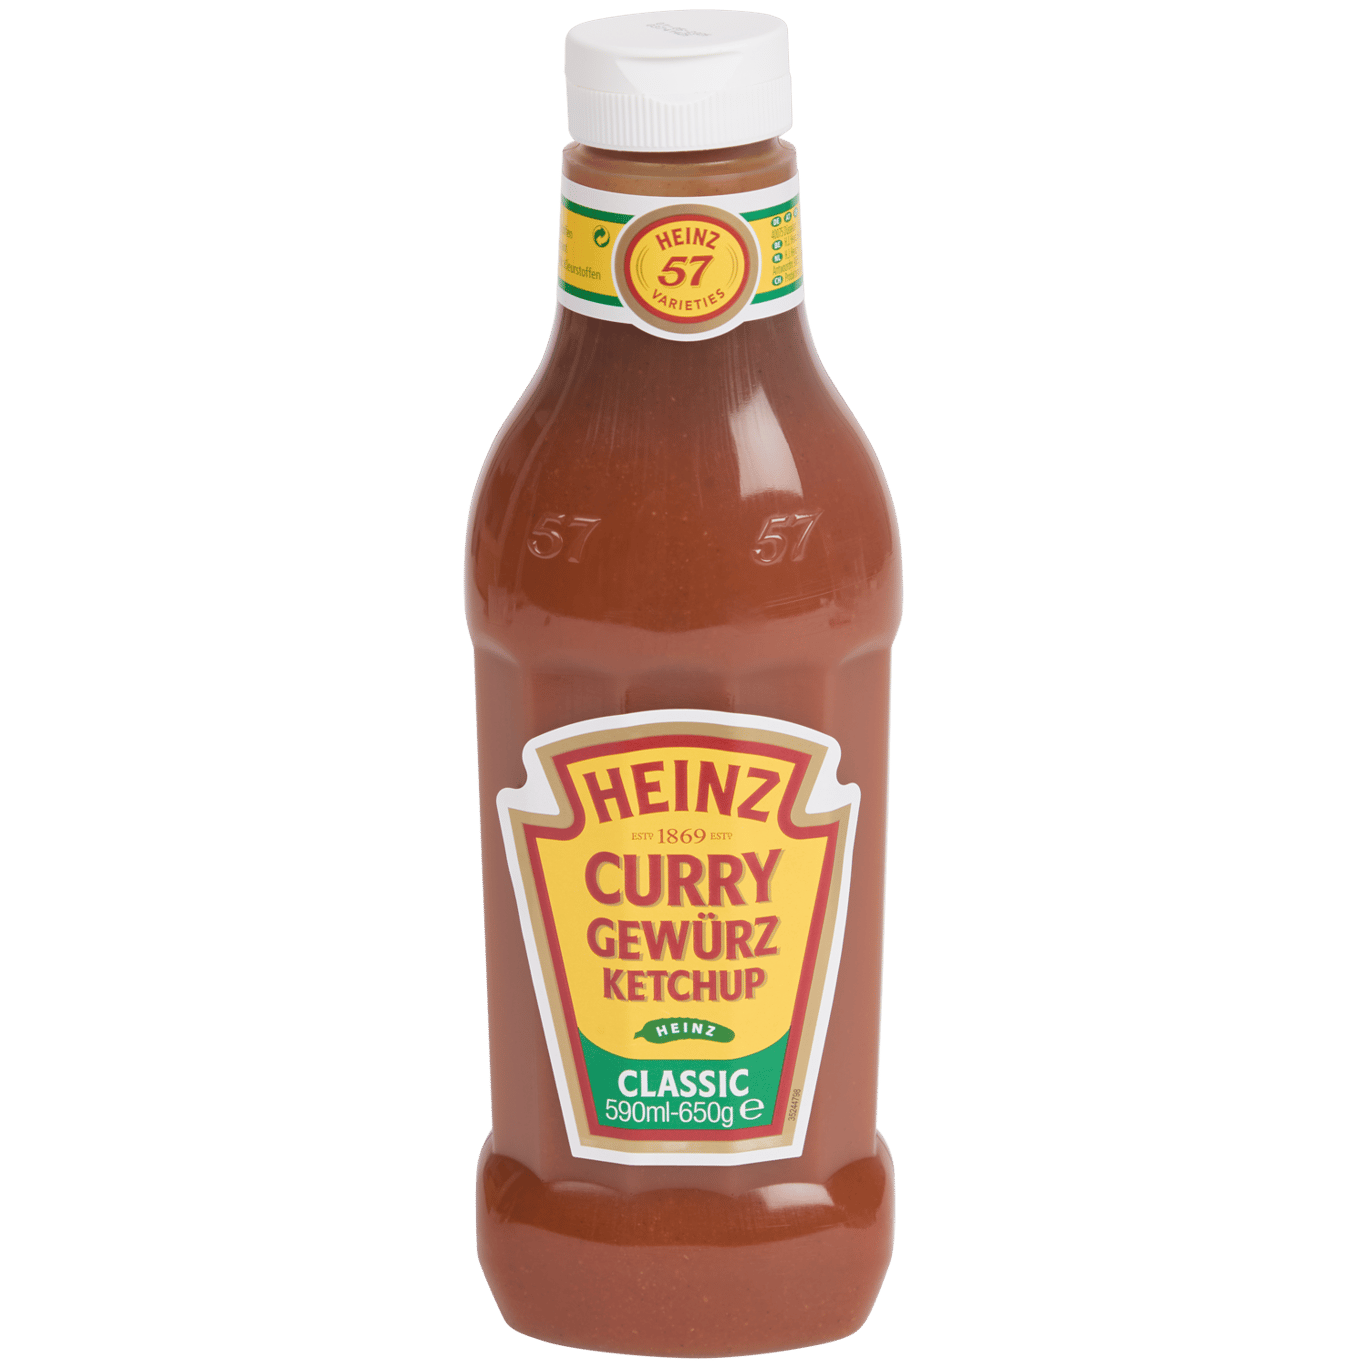 Heinz Curry Gewürz Ketchup Classic